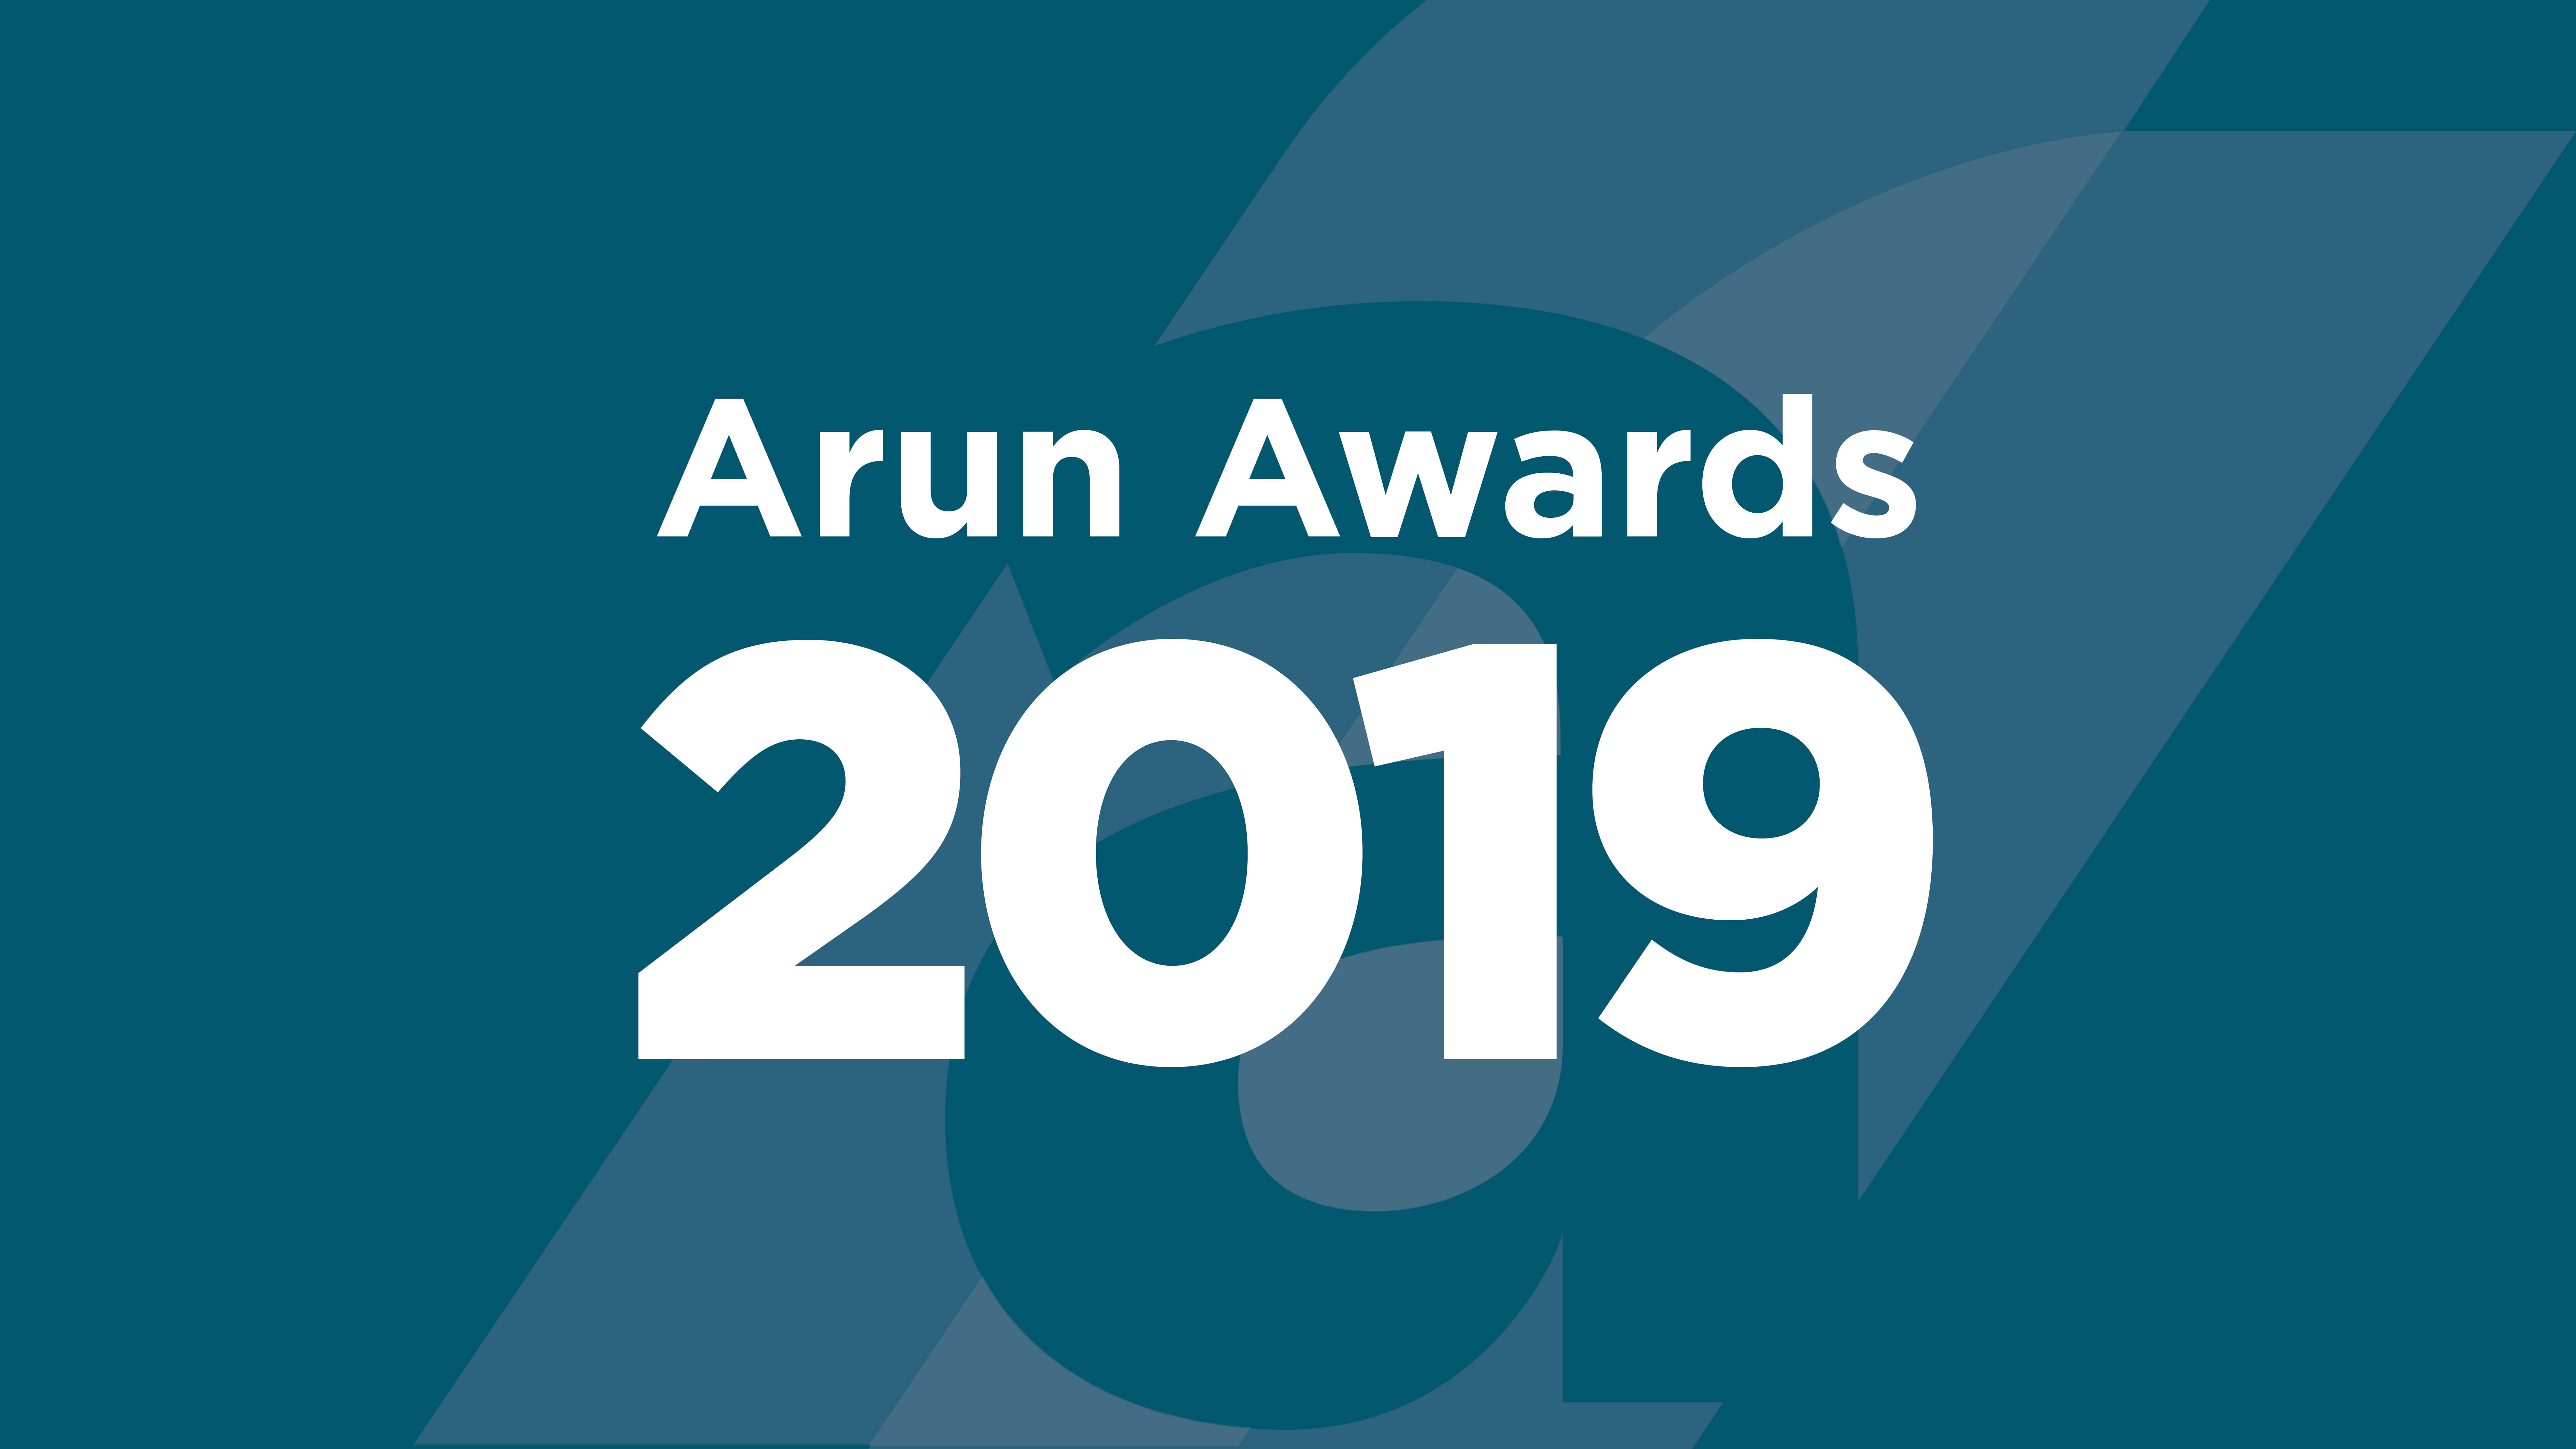 Arun awards 2019